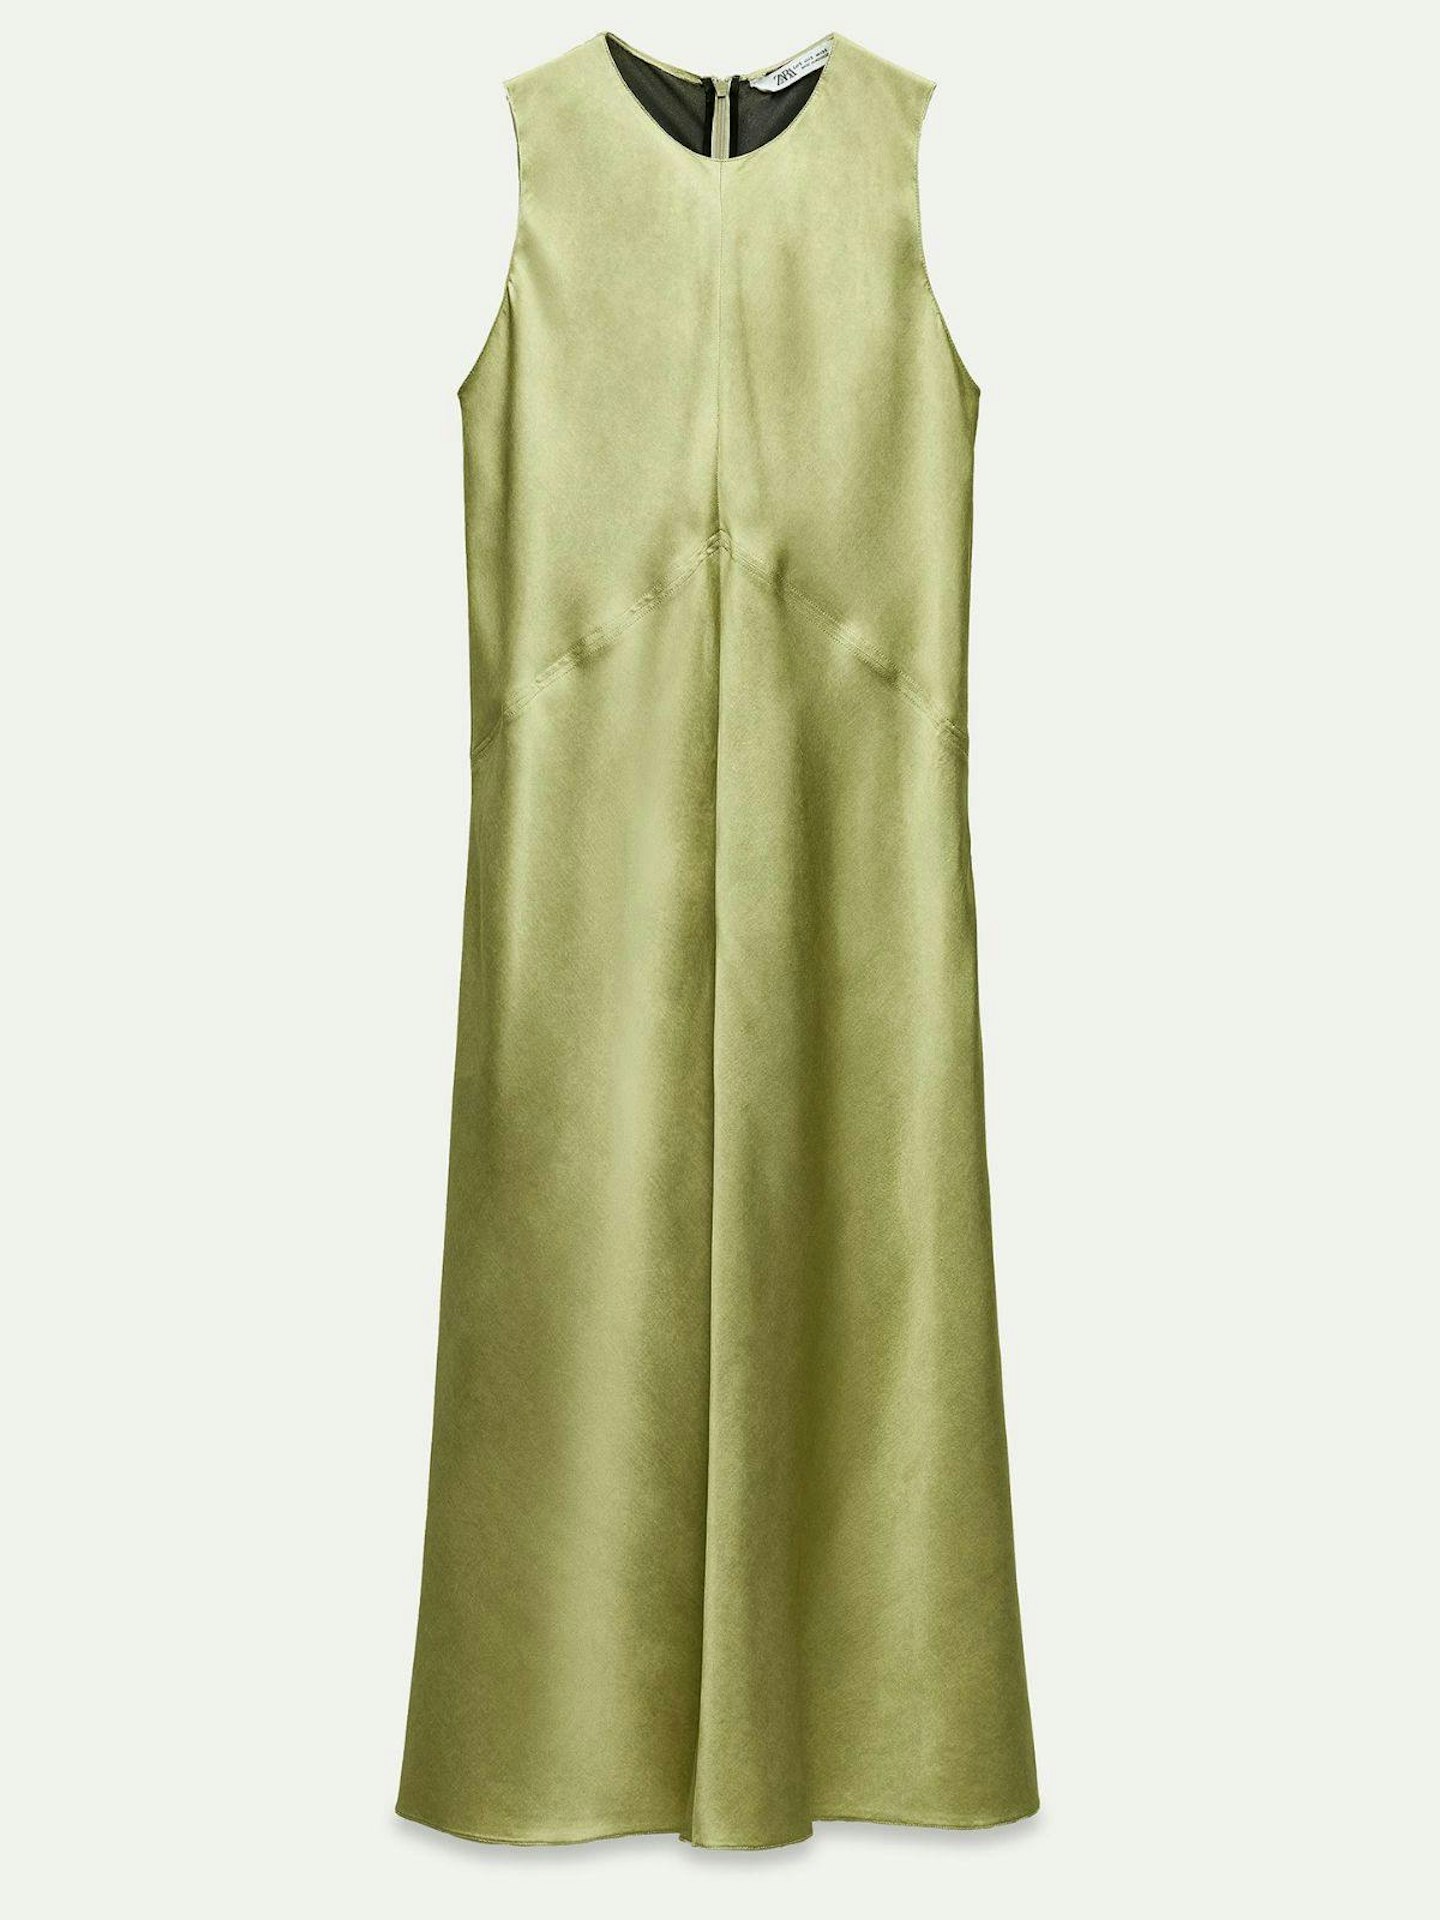 Zara ZW Collection Sleeveless Satin Dress